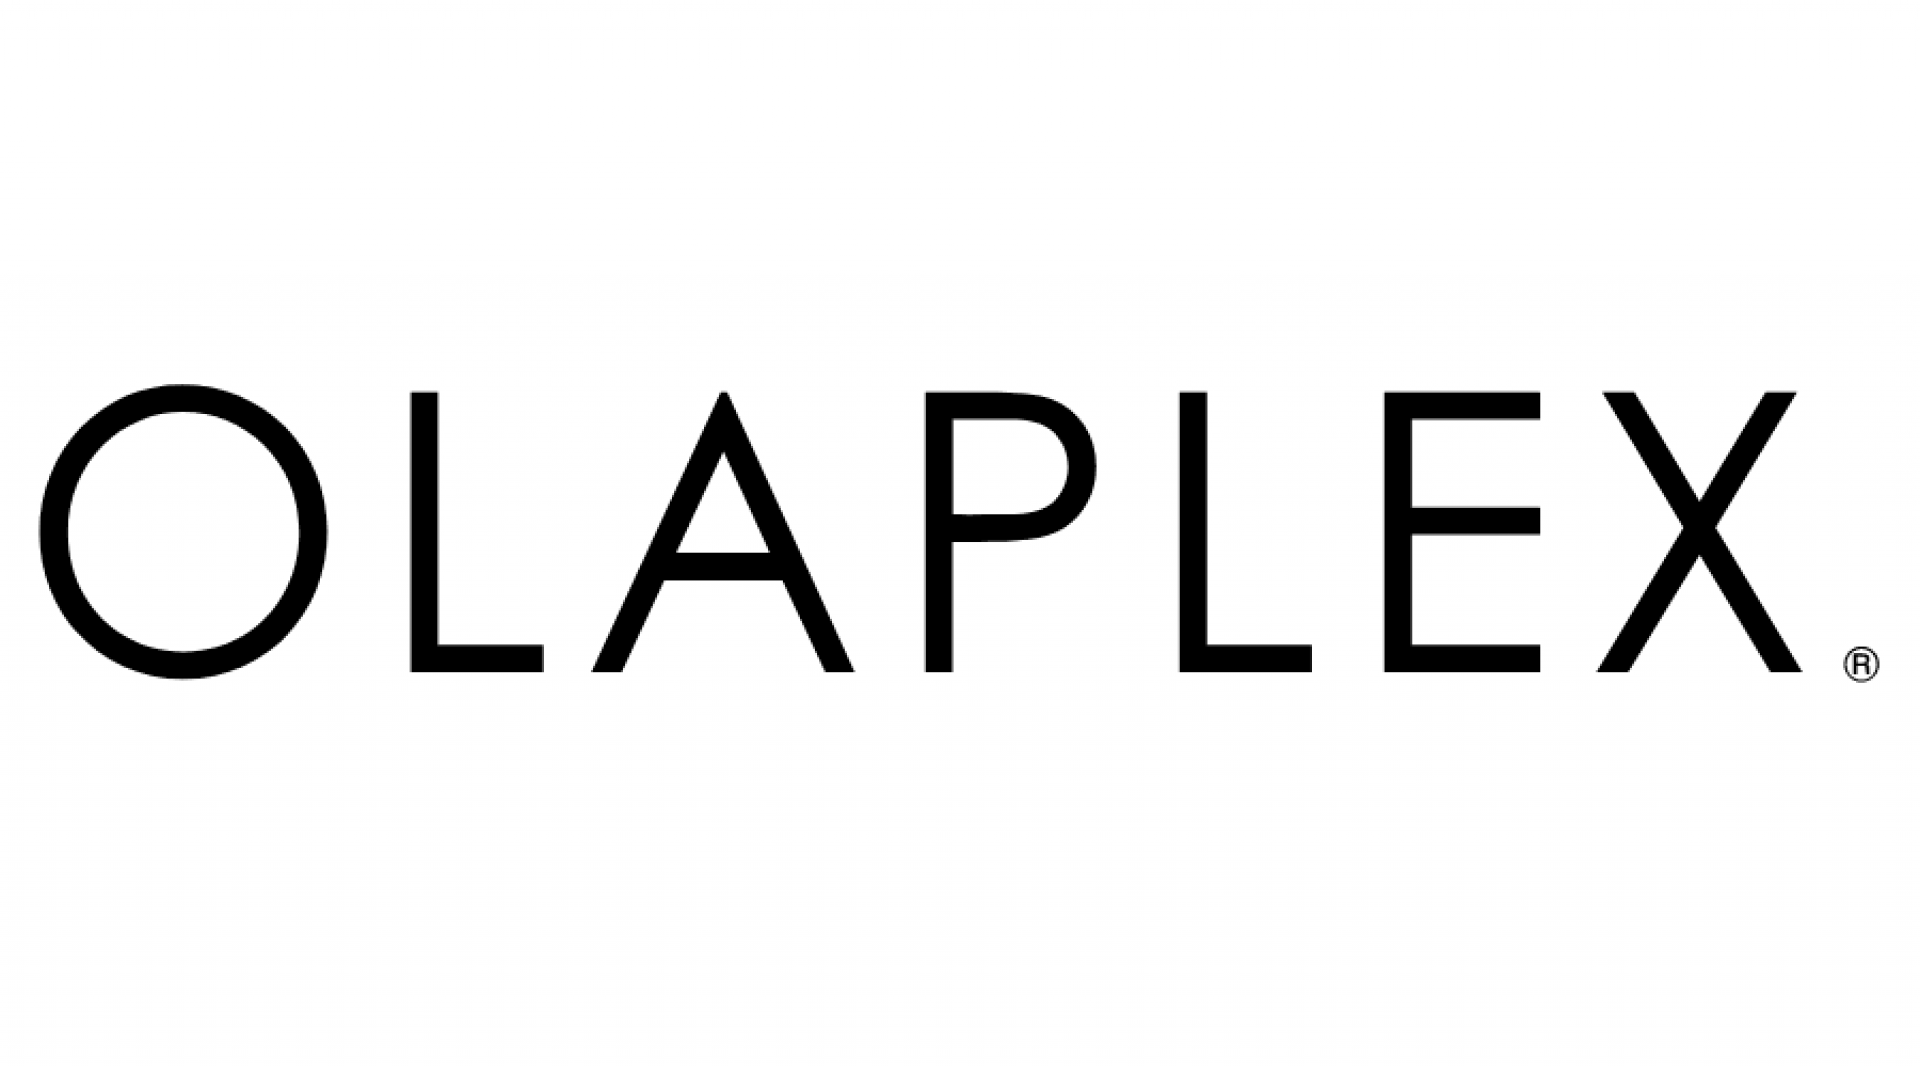 olaplex-vector-logo.png